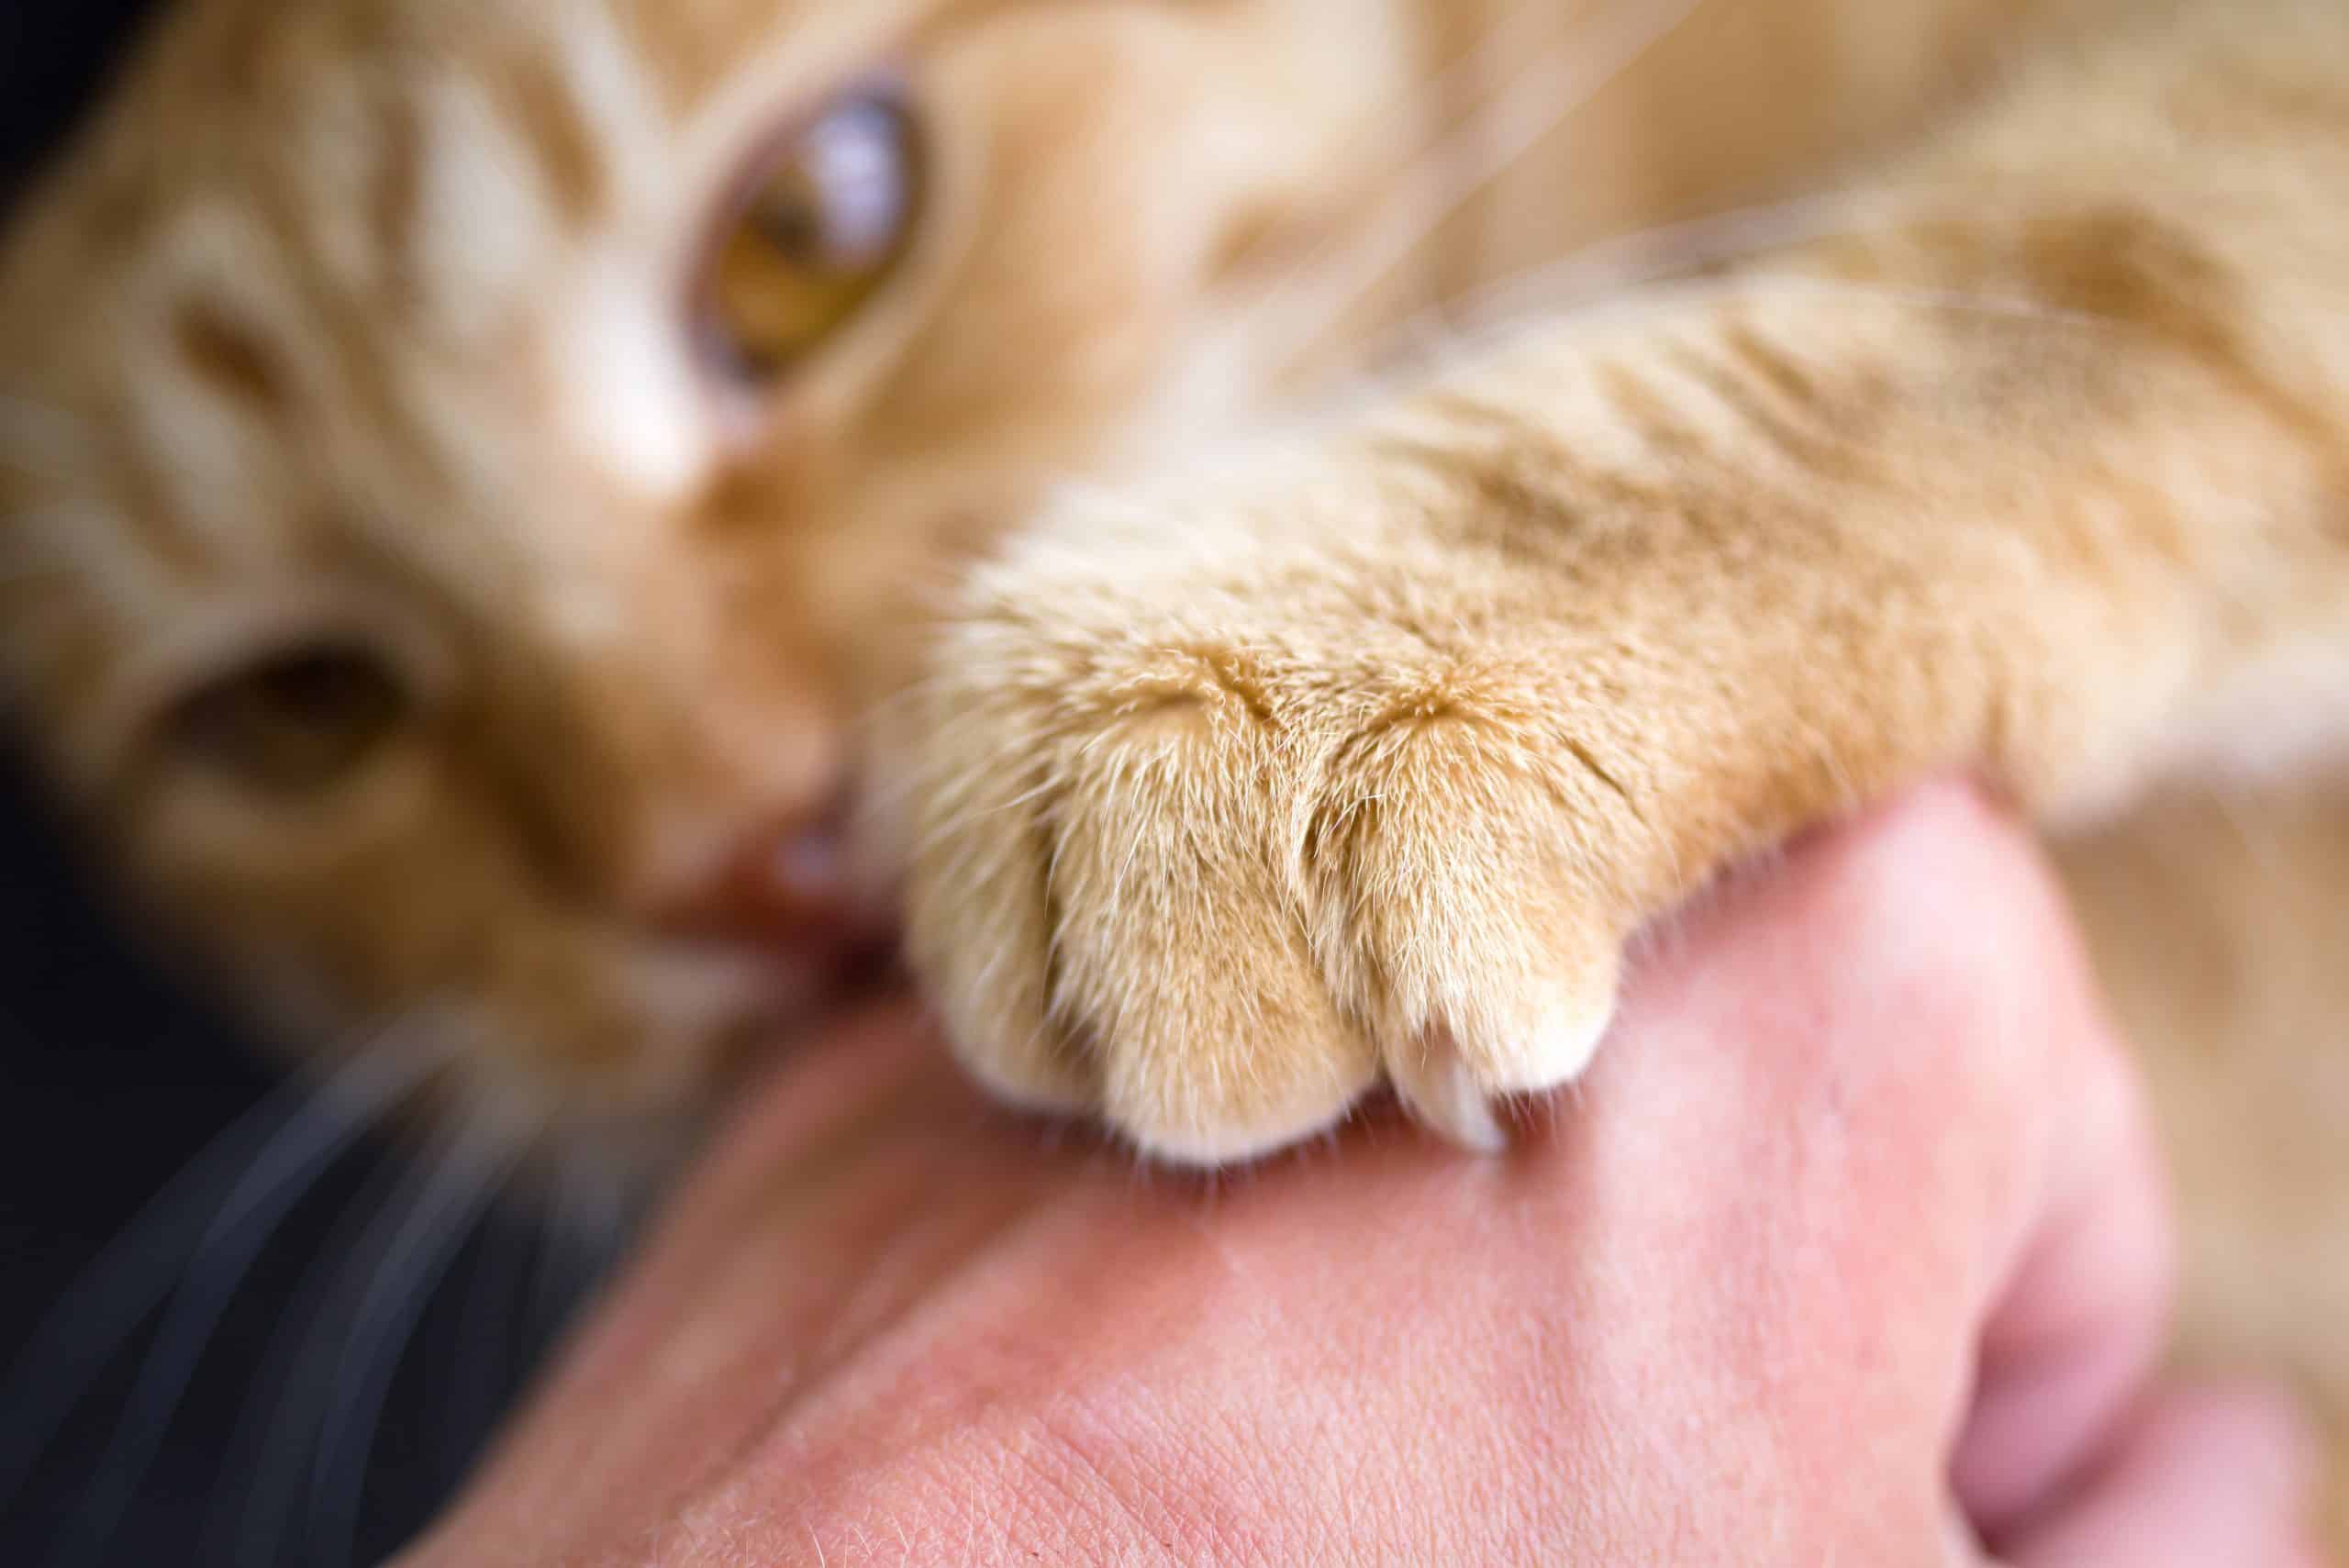 Red cat bites human hand, close-up